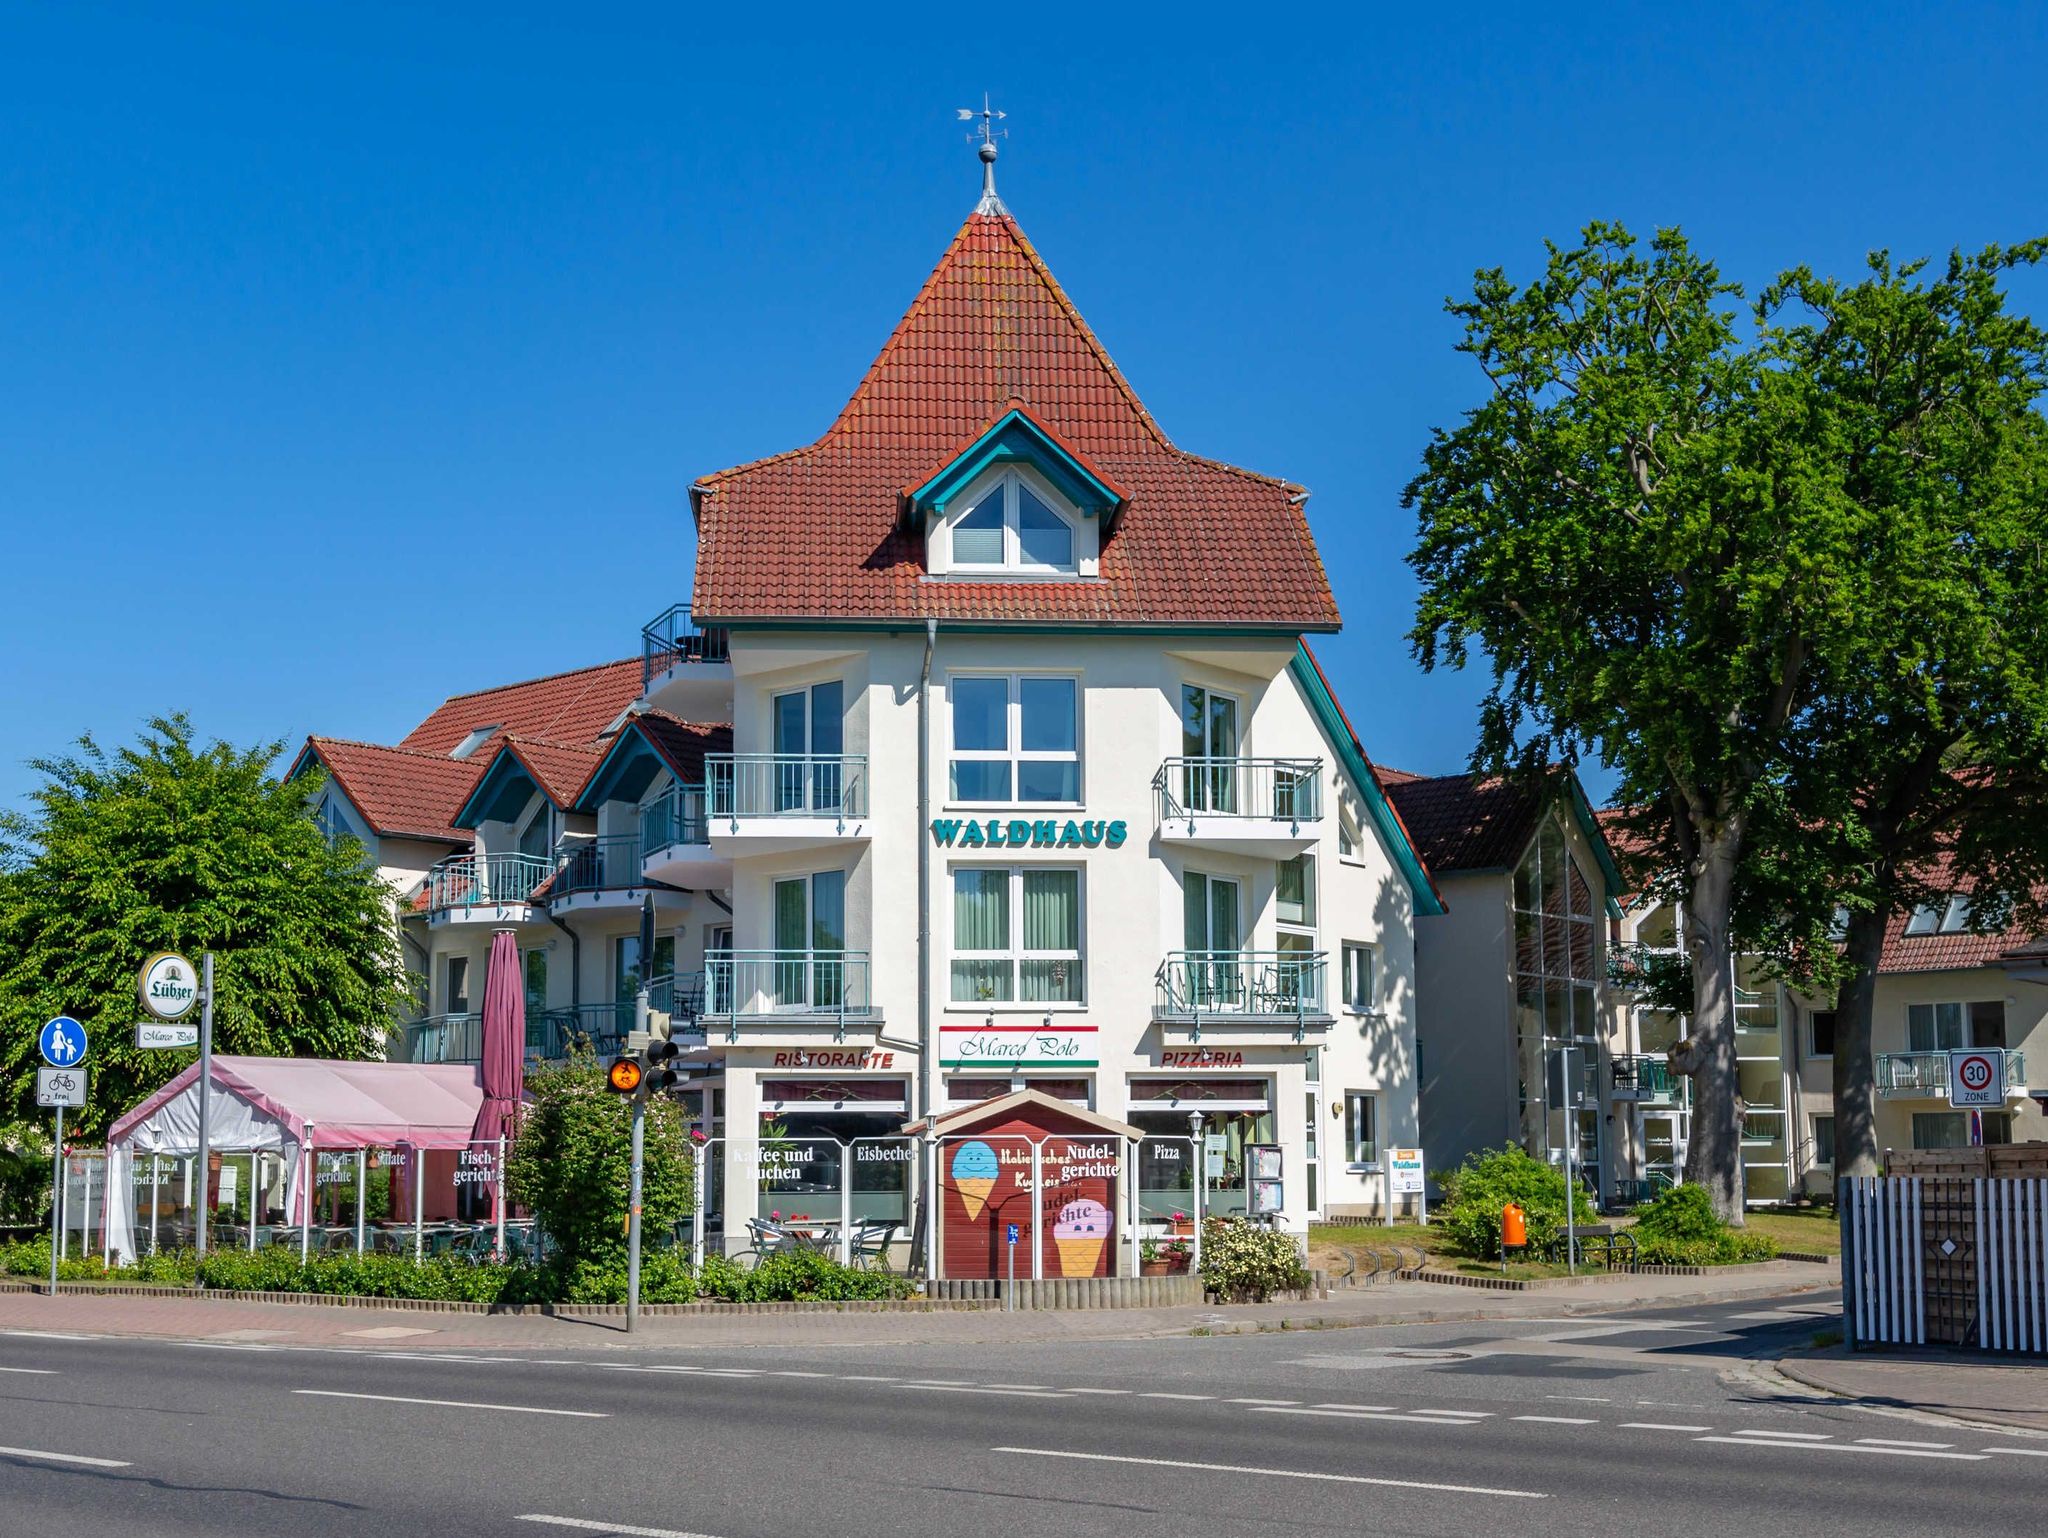 Hotel Königstein Kiel by Tulip Inn